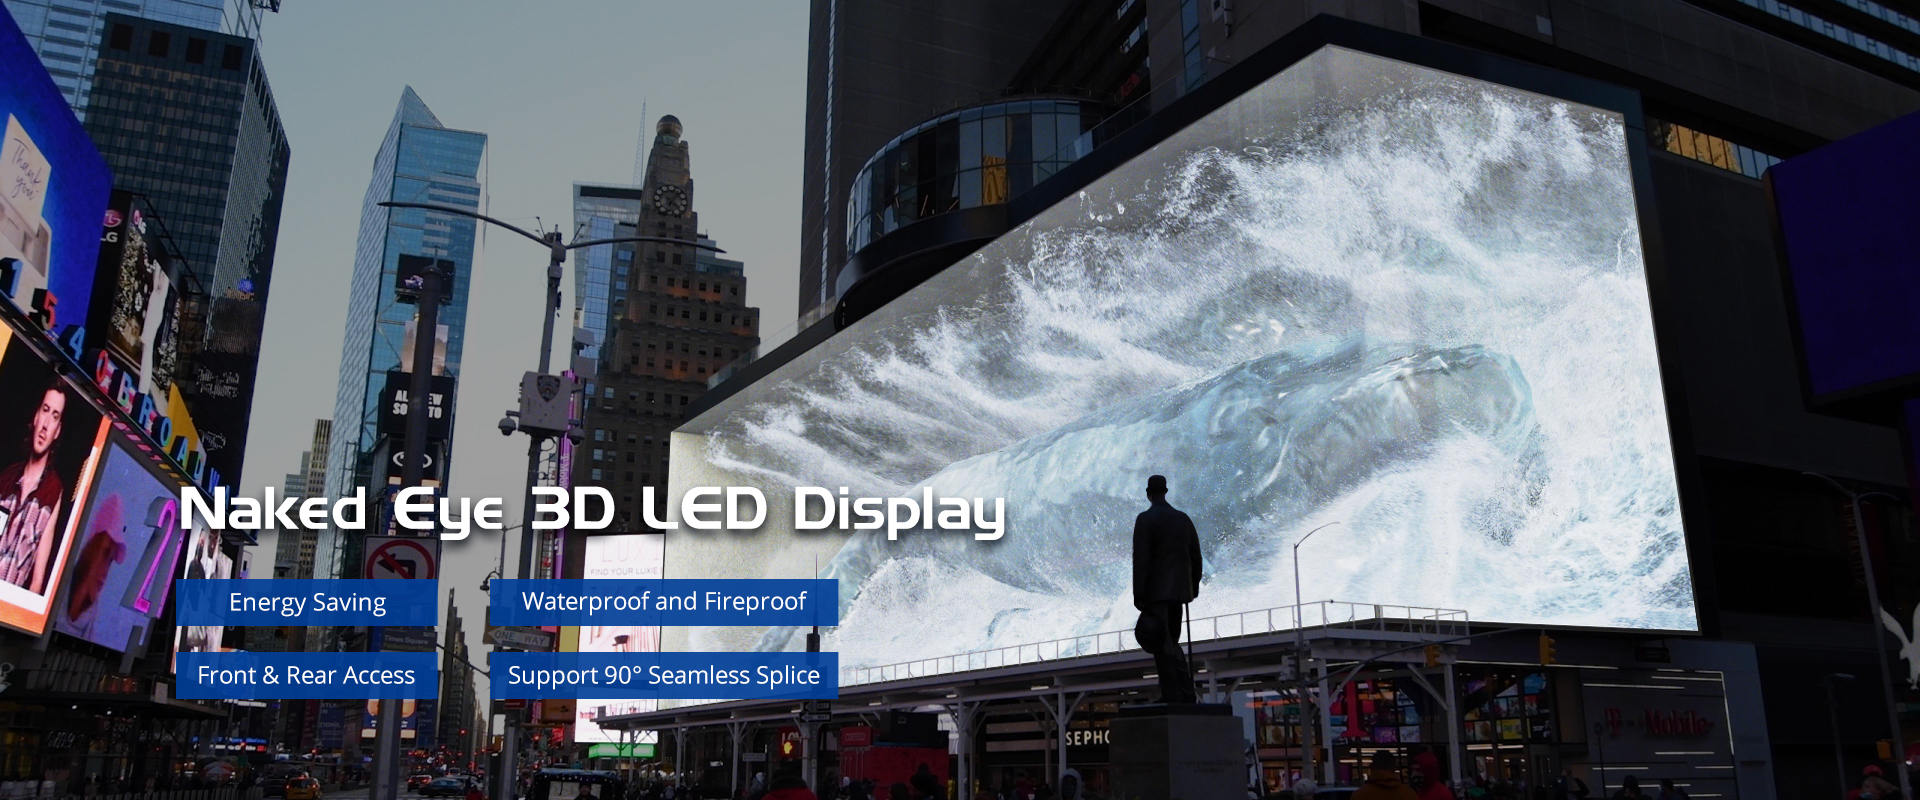 display LED 3D ad occhio nudo